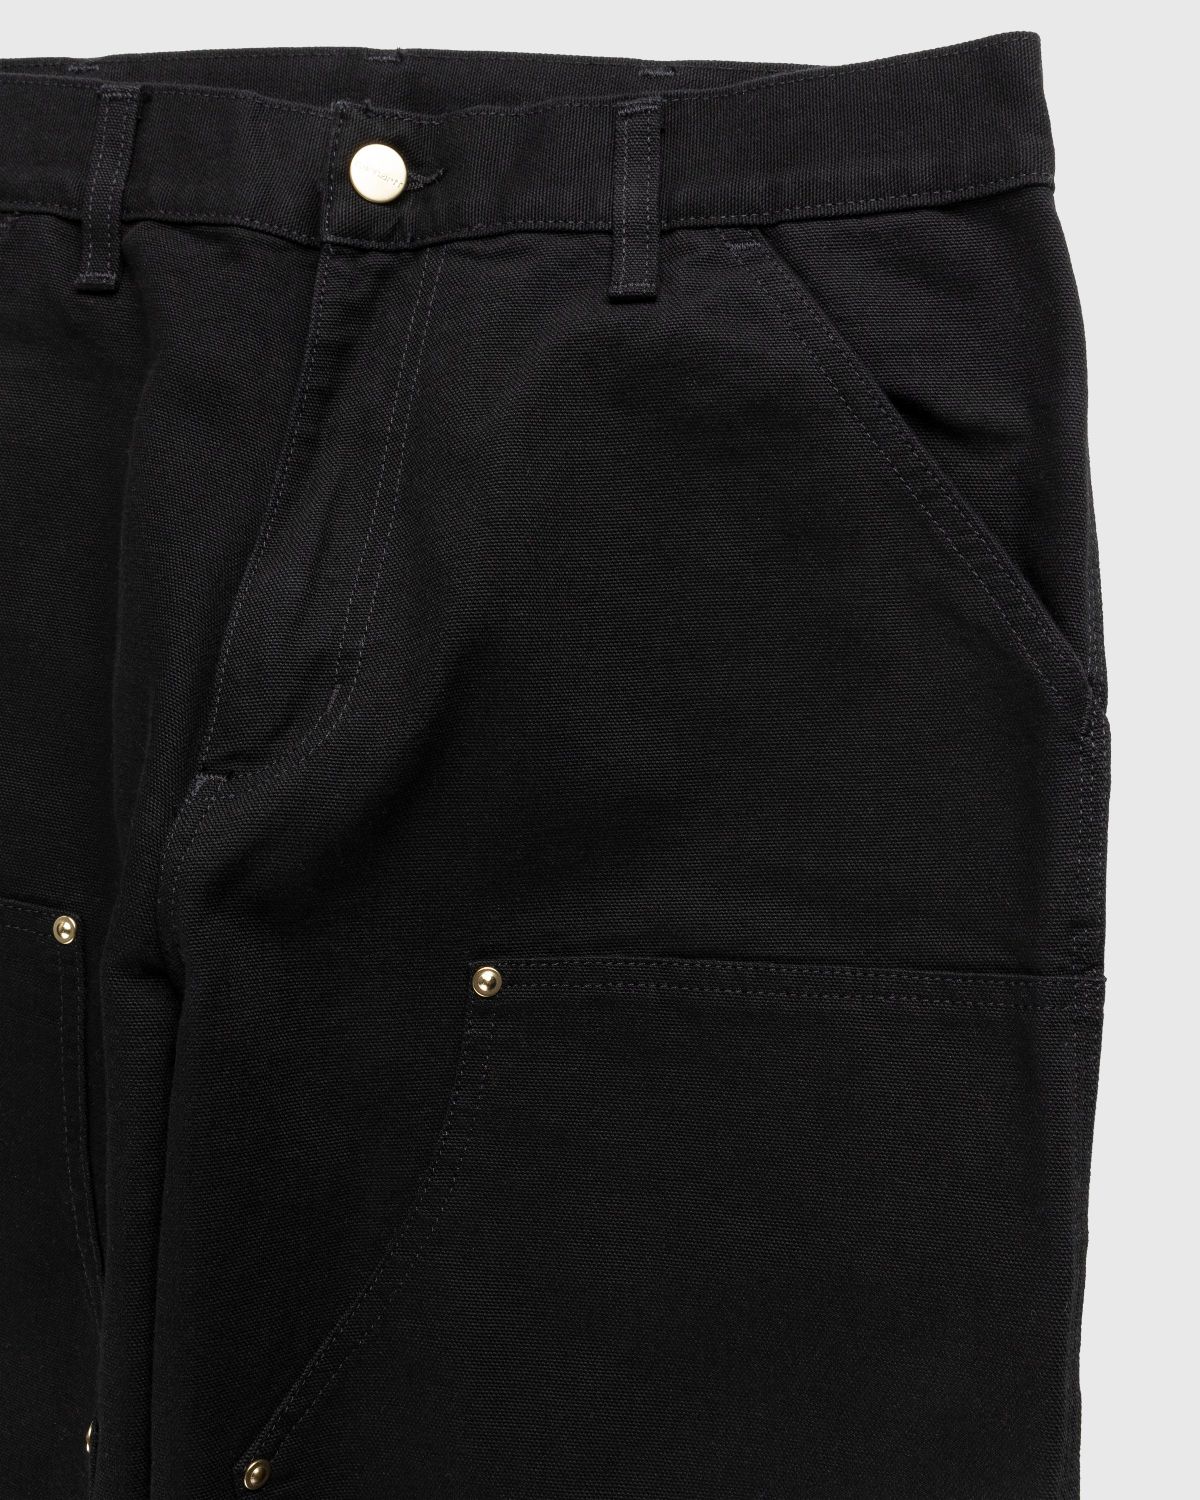 Carhartt WIP – Double Knee Pant Black | Highsnobiety Shop